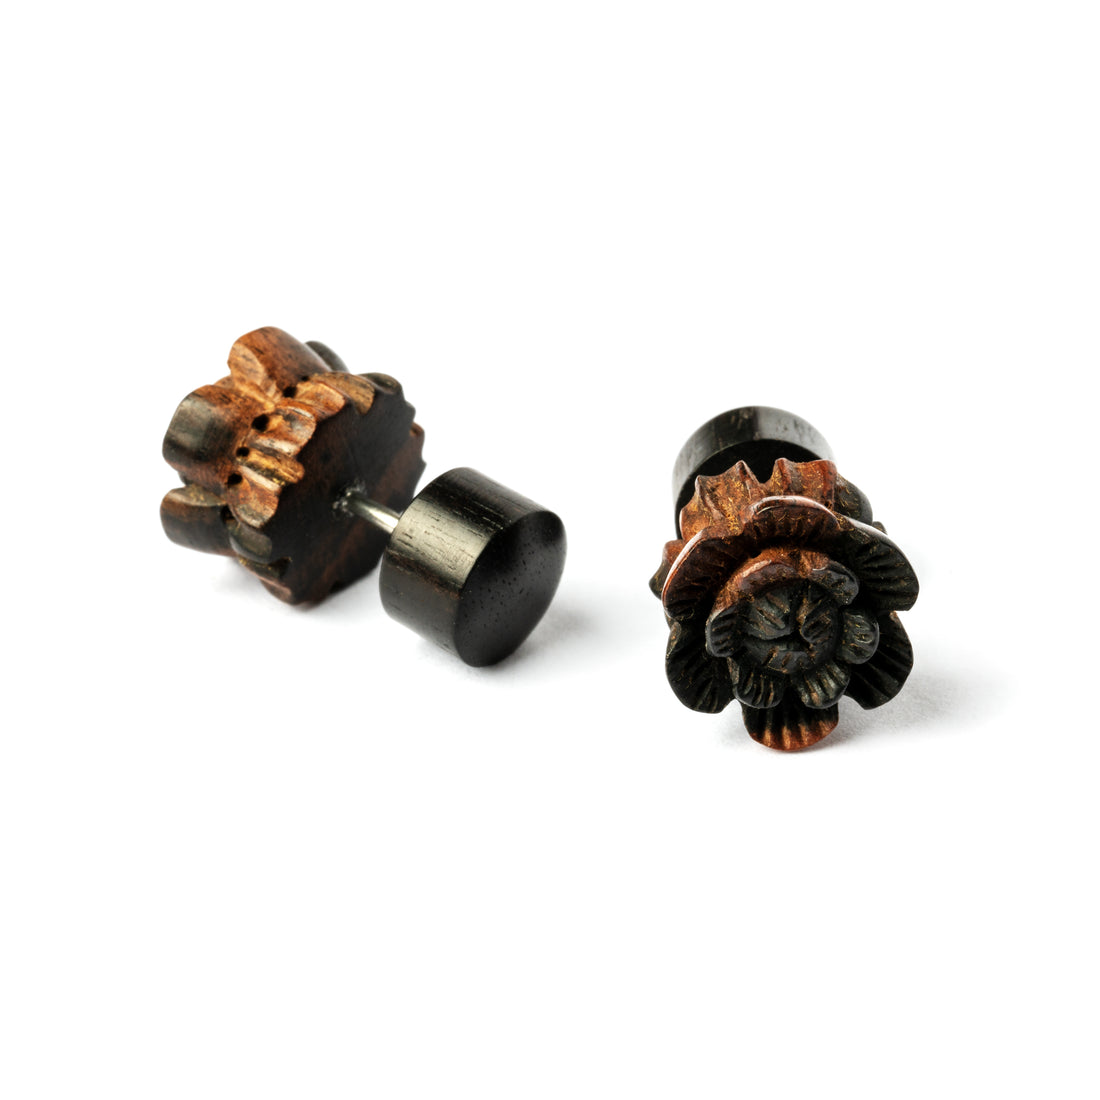 pair of wood flower fake gauge plug earrings front and side view